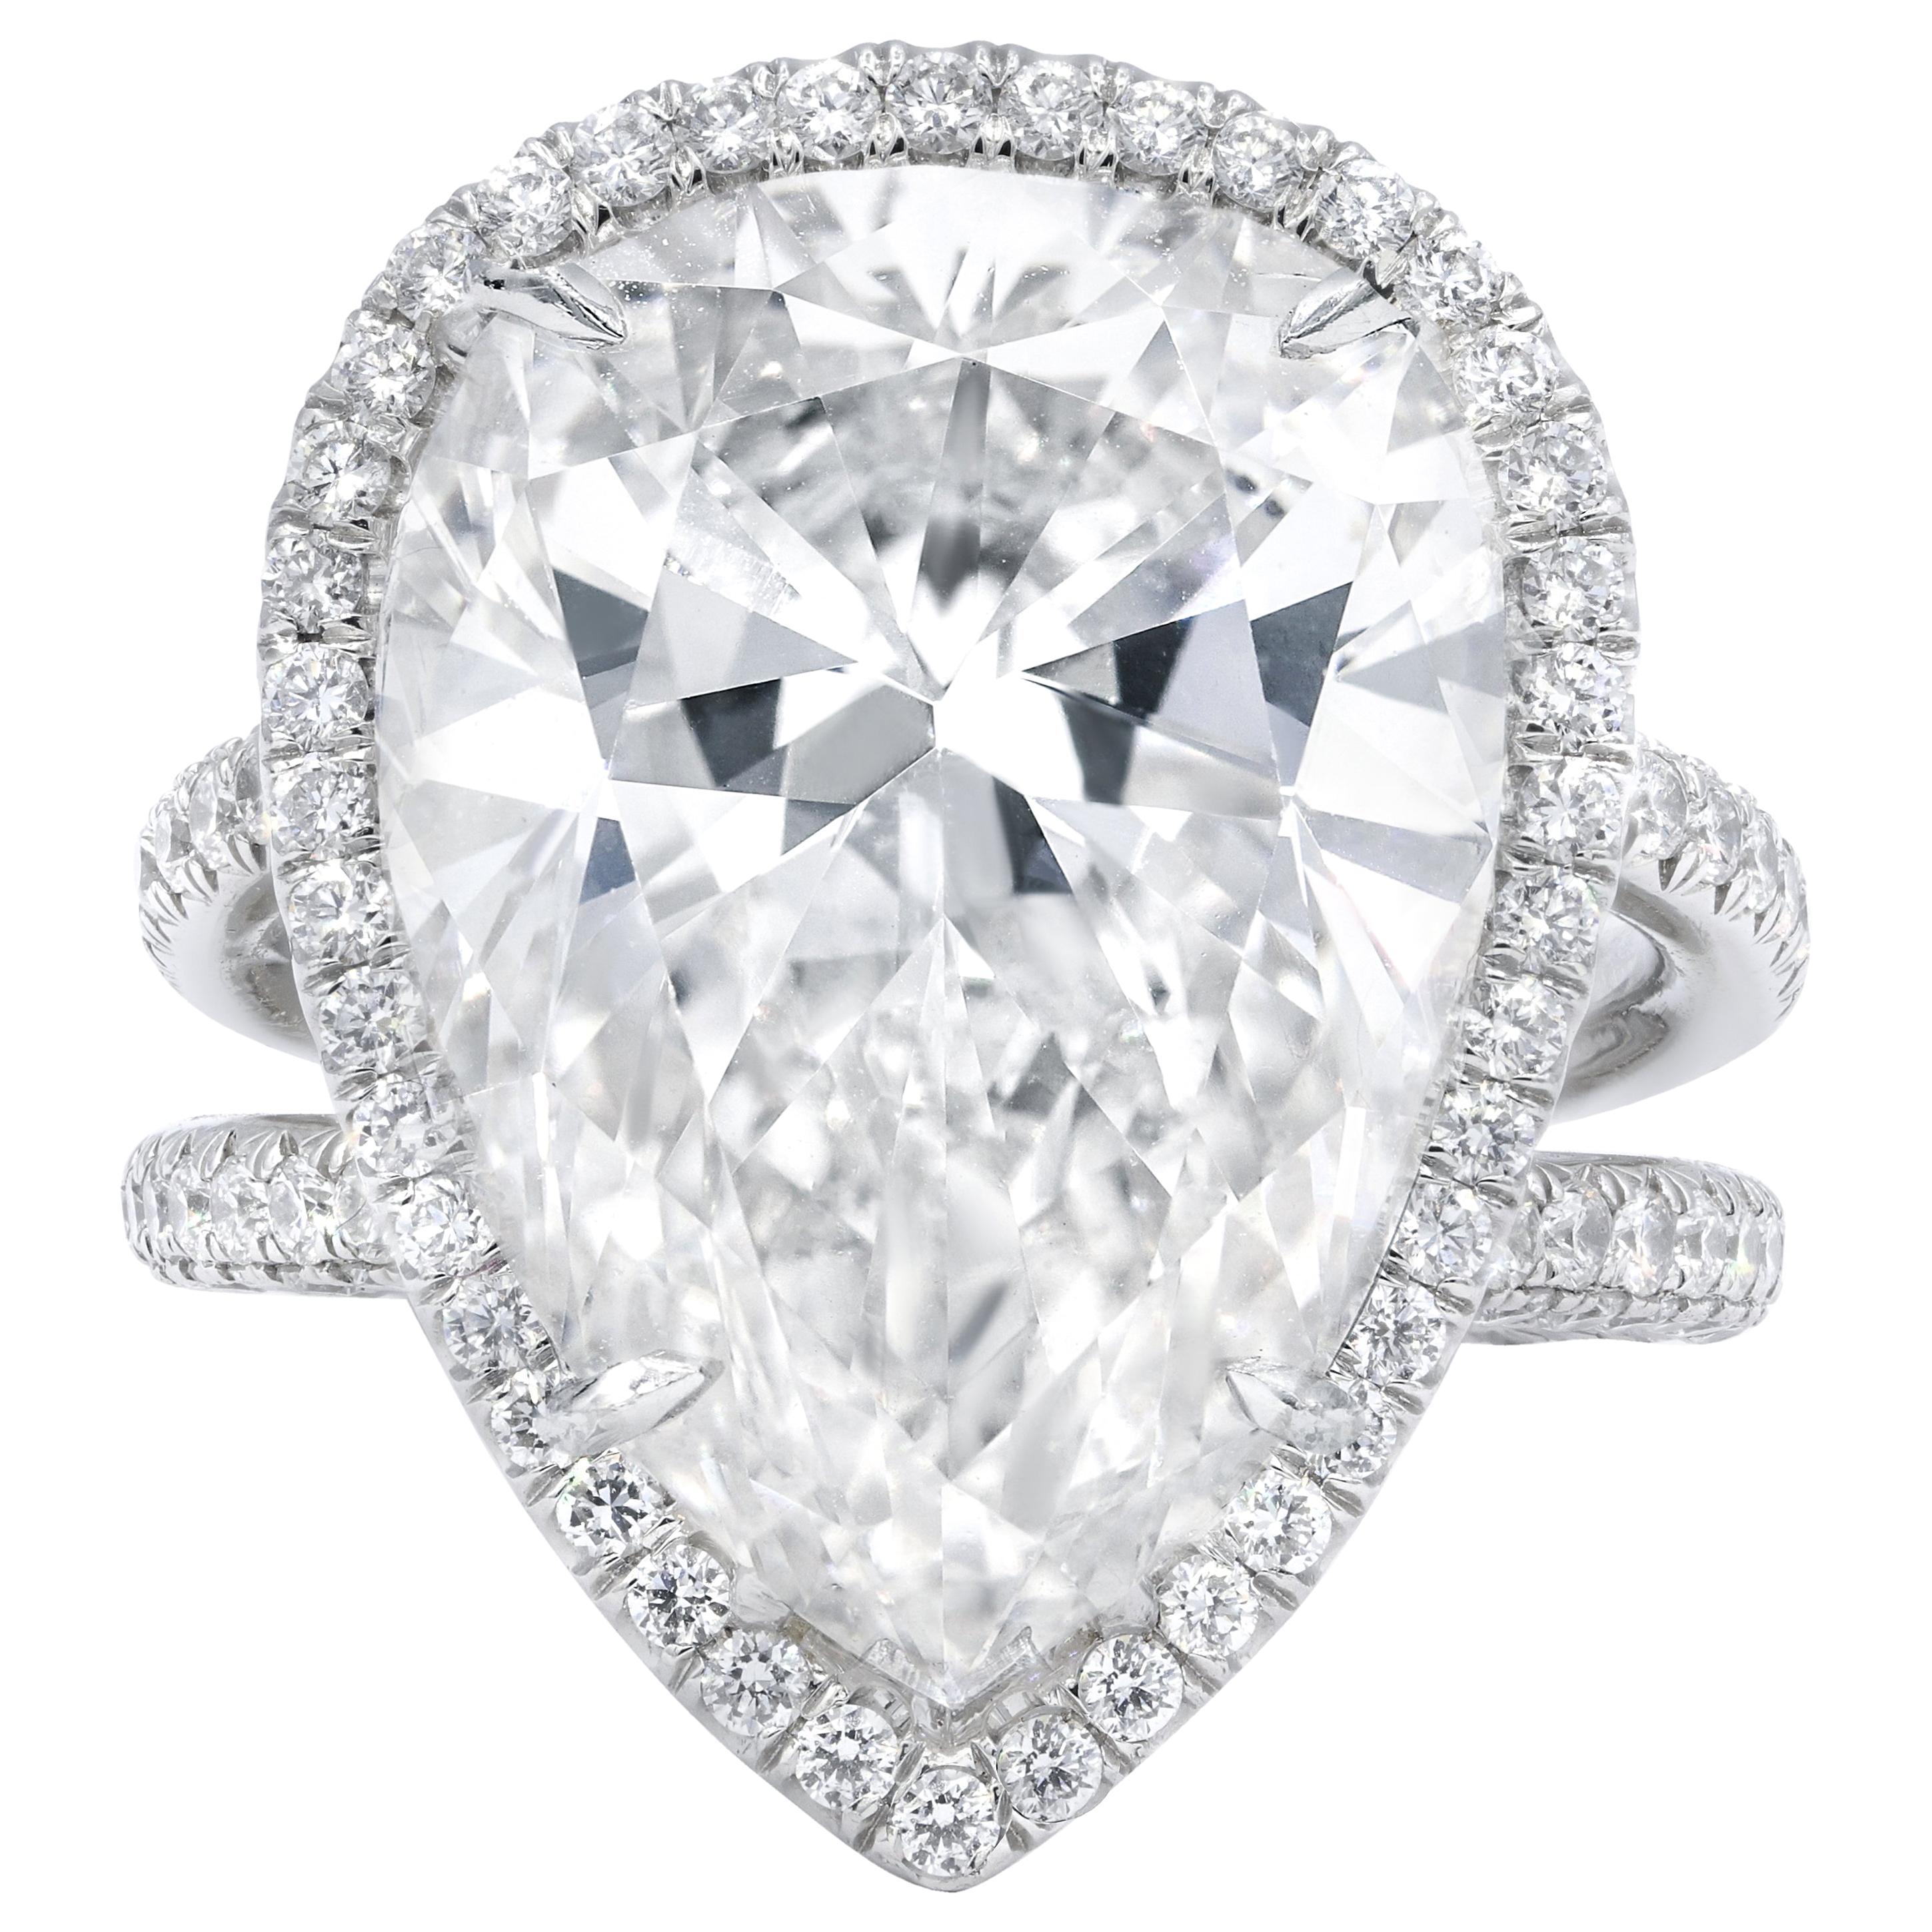 Diana M. 15.01 Carat F-SI2 Pear Shaped Diamond Ring